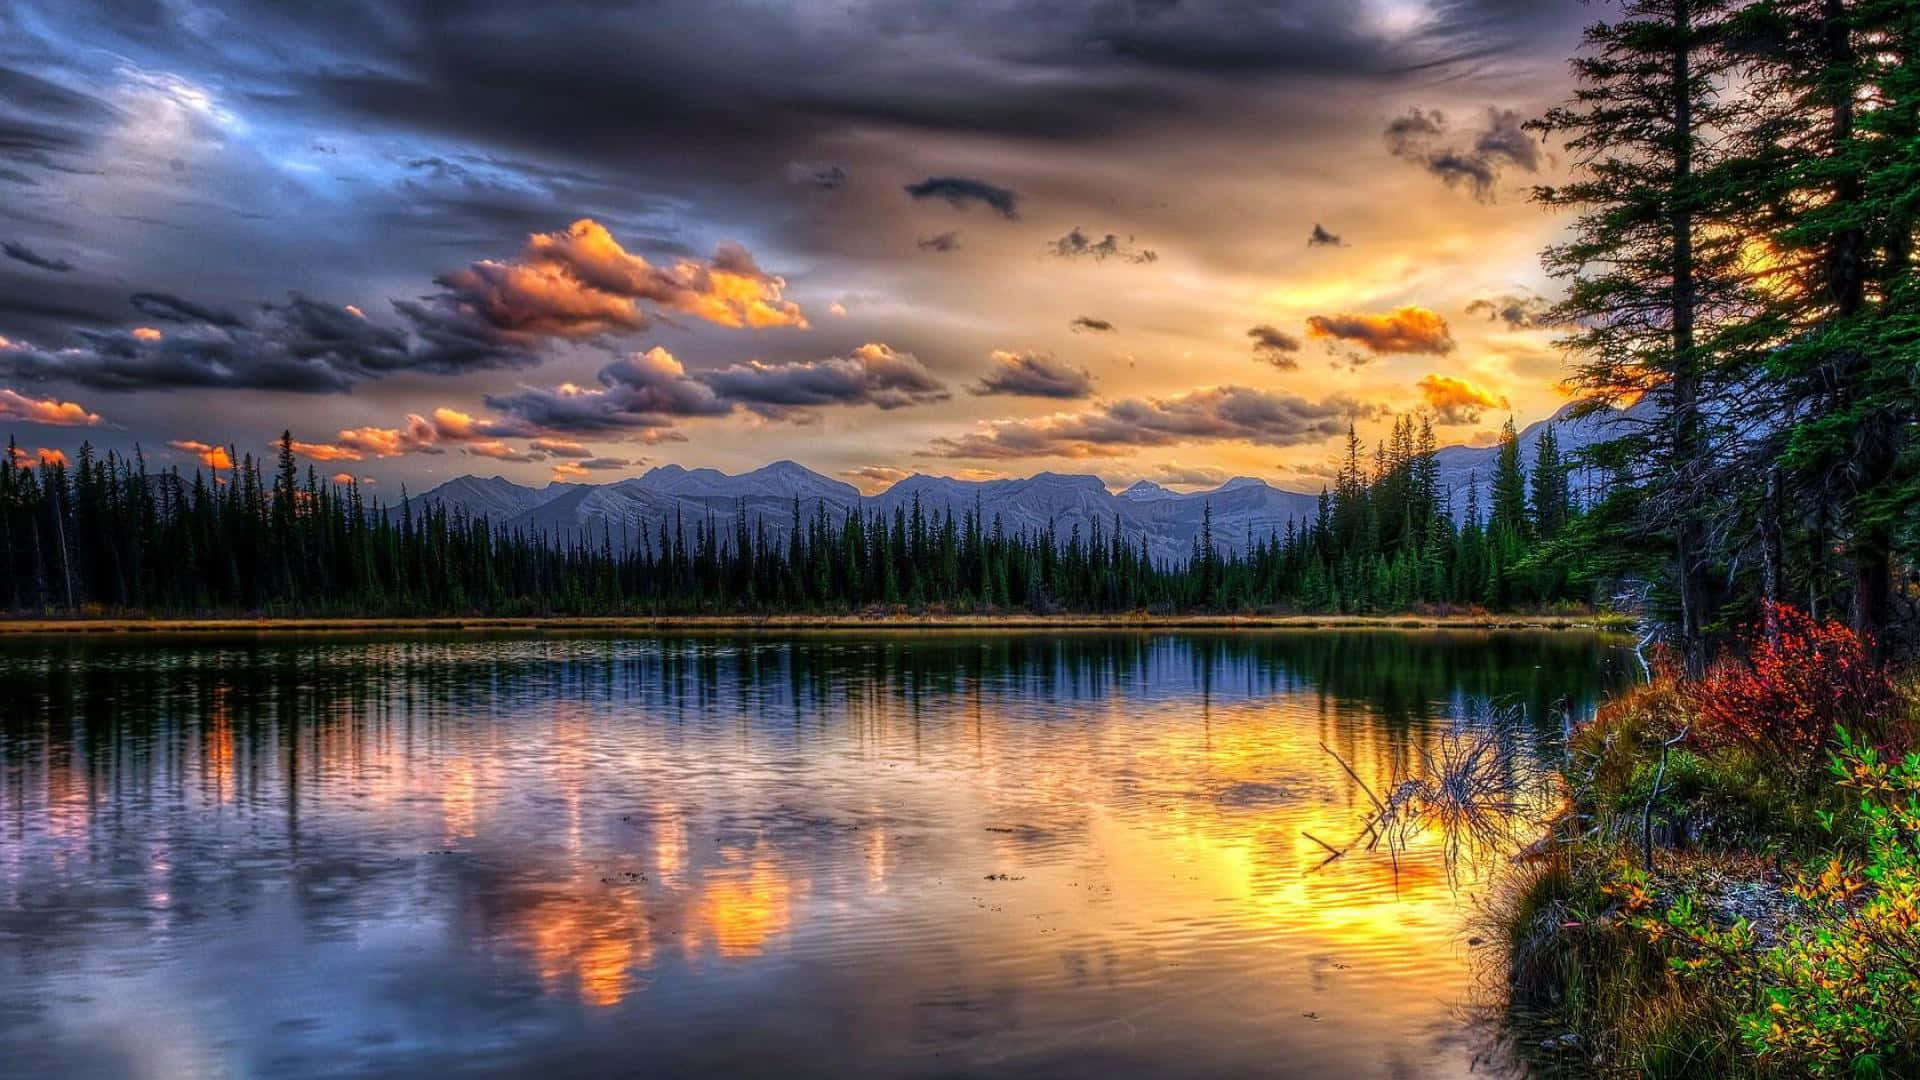 Sunset Reflections At Mountain Lake.jpg Wallpaper